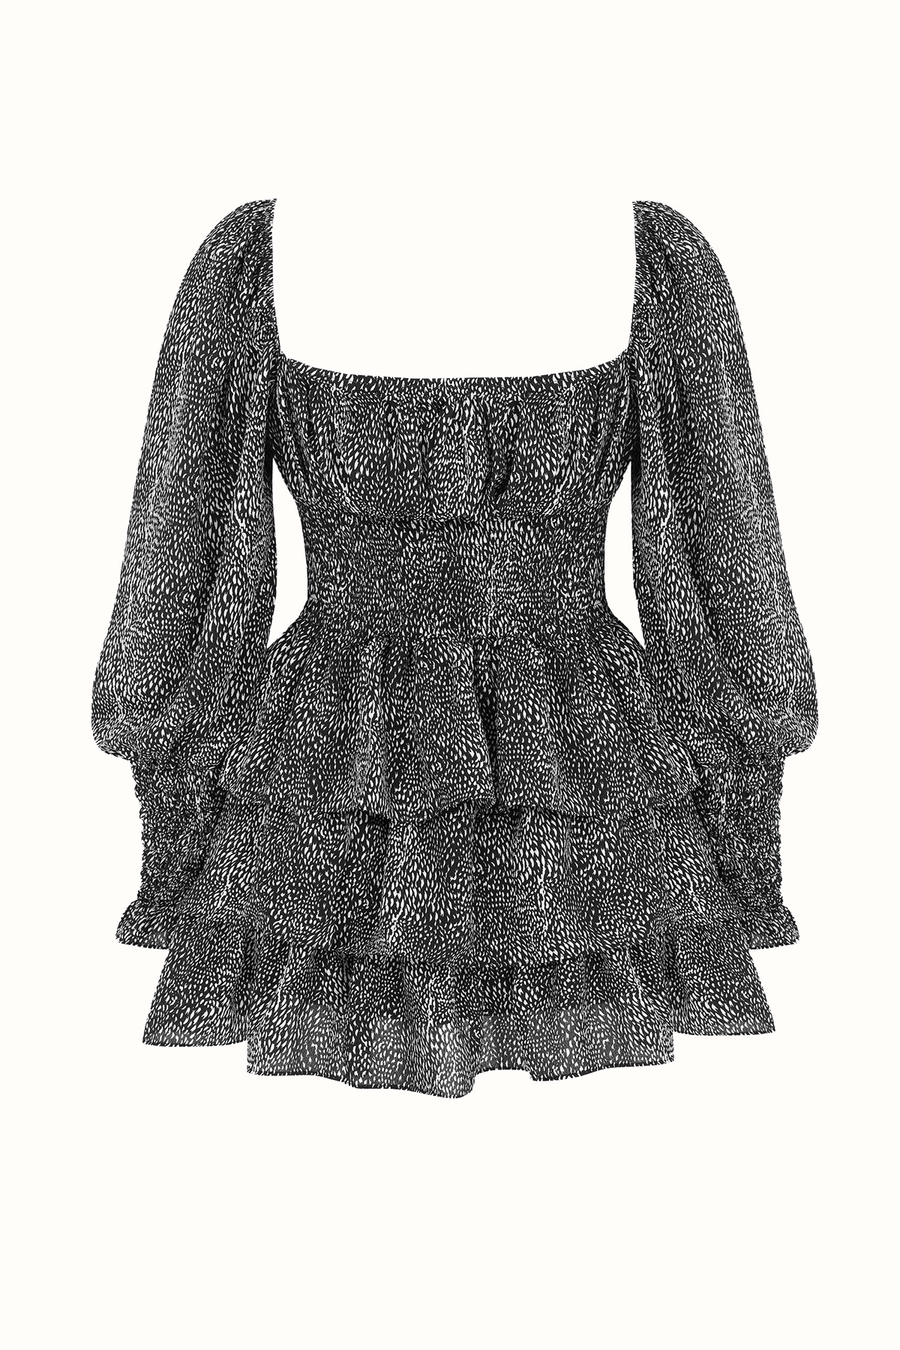 Berry Elbise / Siyah Beyaz Desenli - NAIA ISTANBUL Shop Online